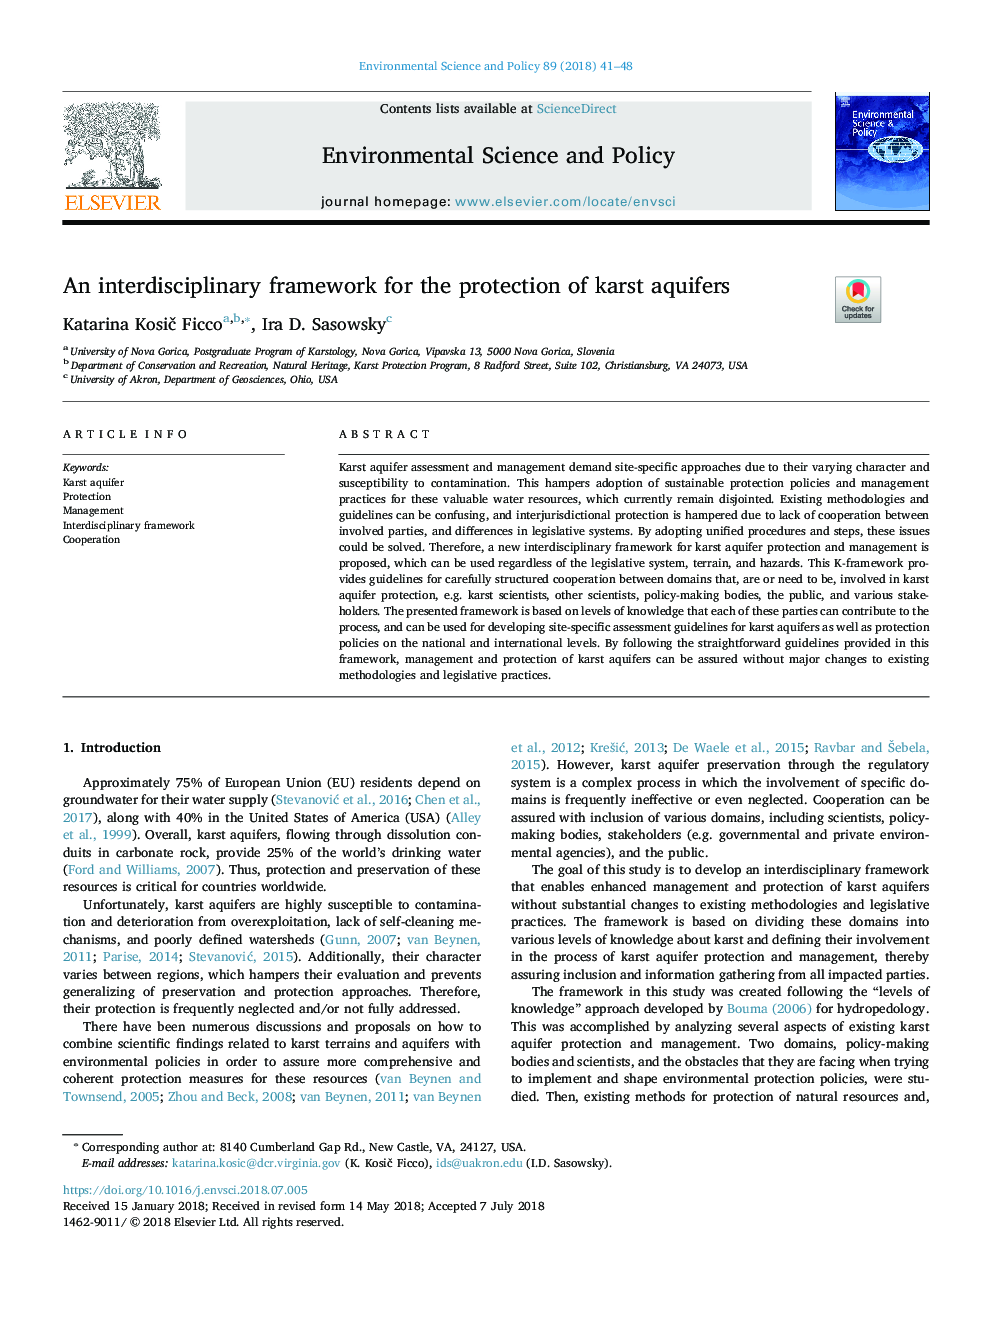 An interdisciplinary framework for the protection of karst aquifers